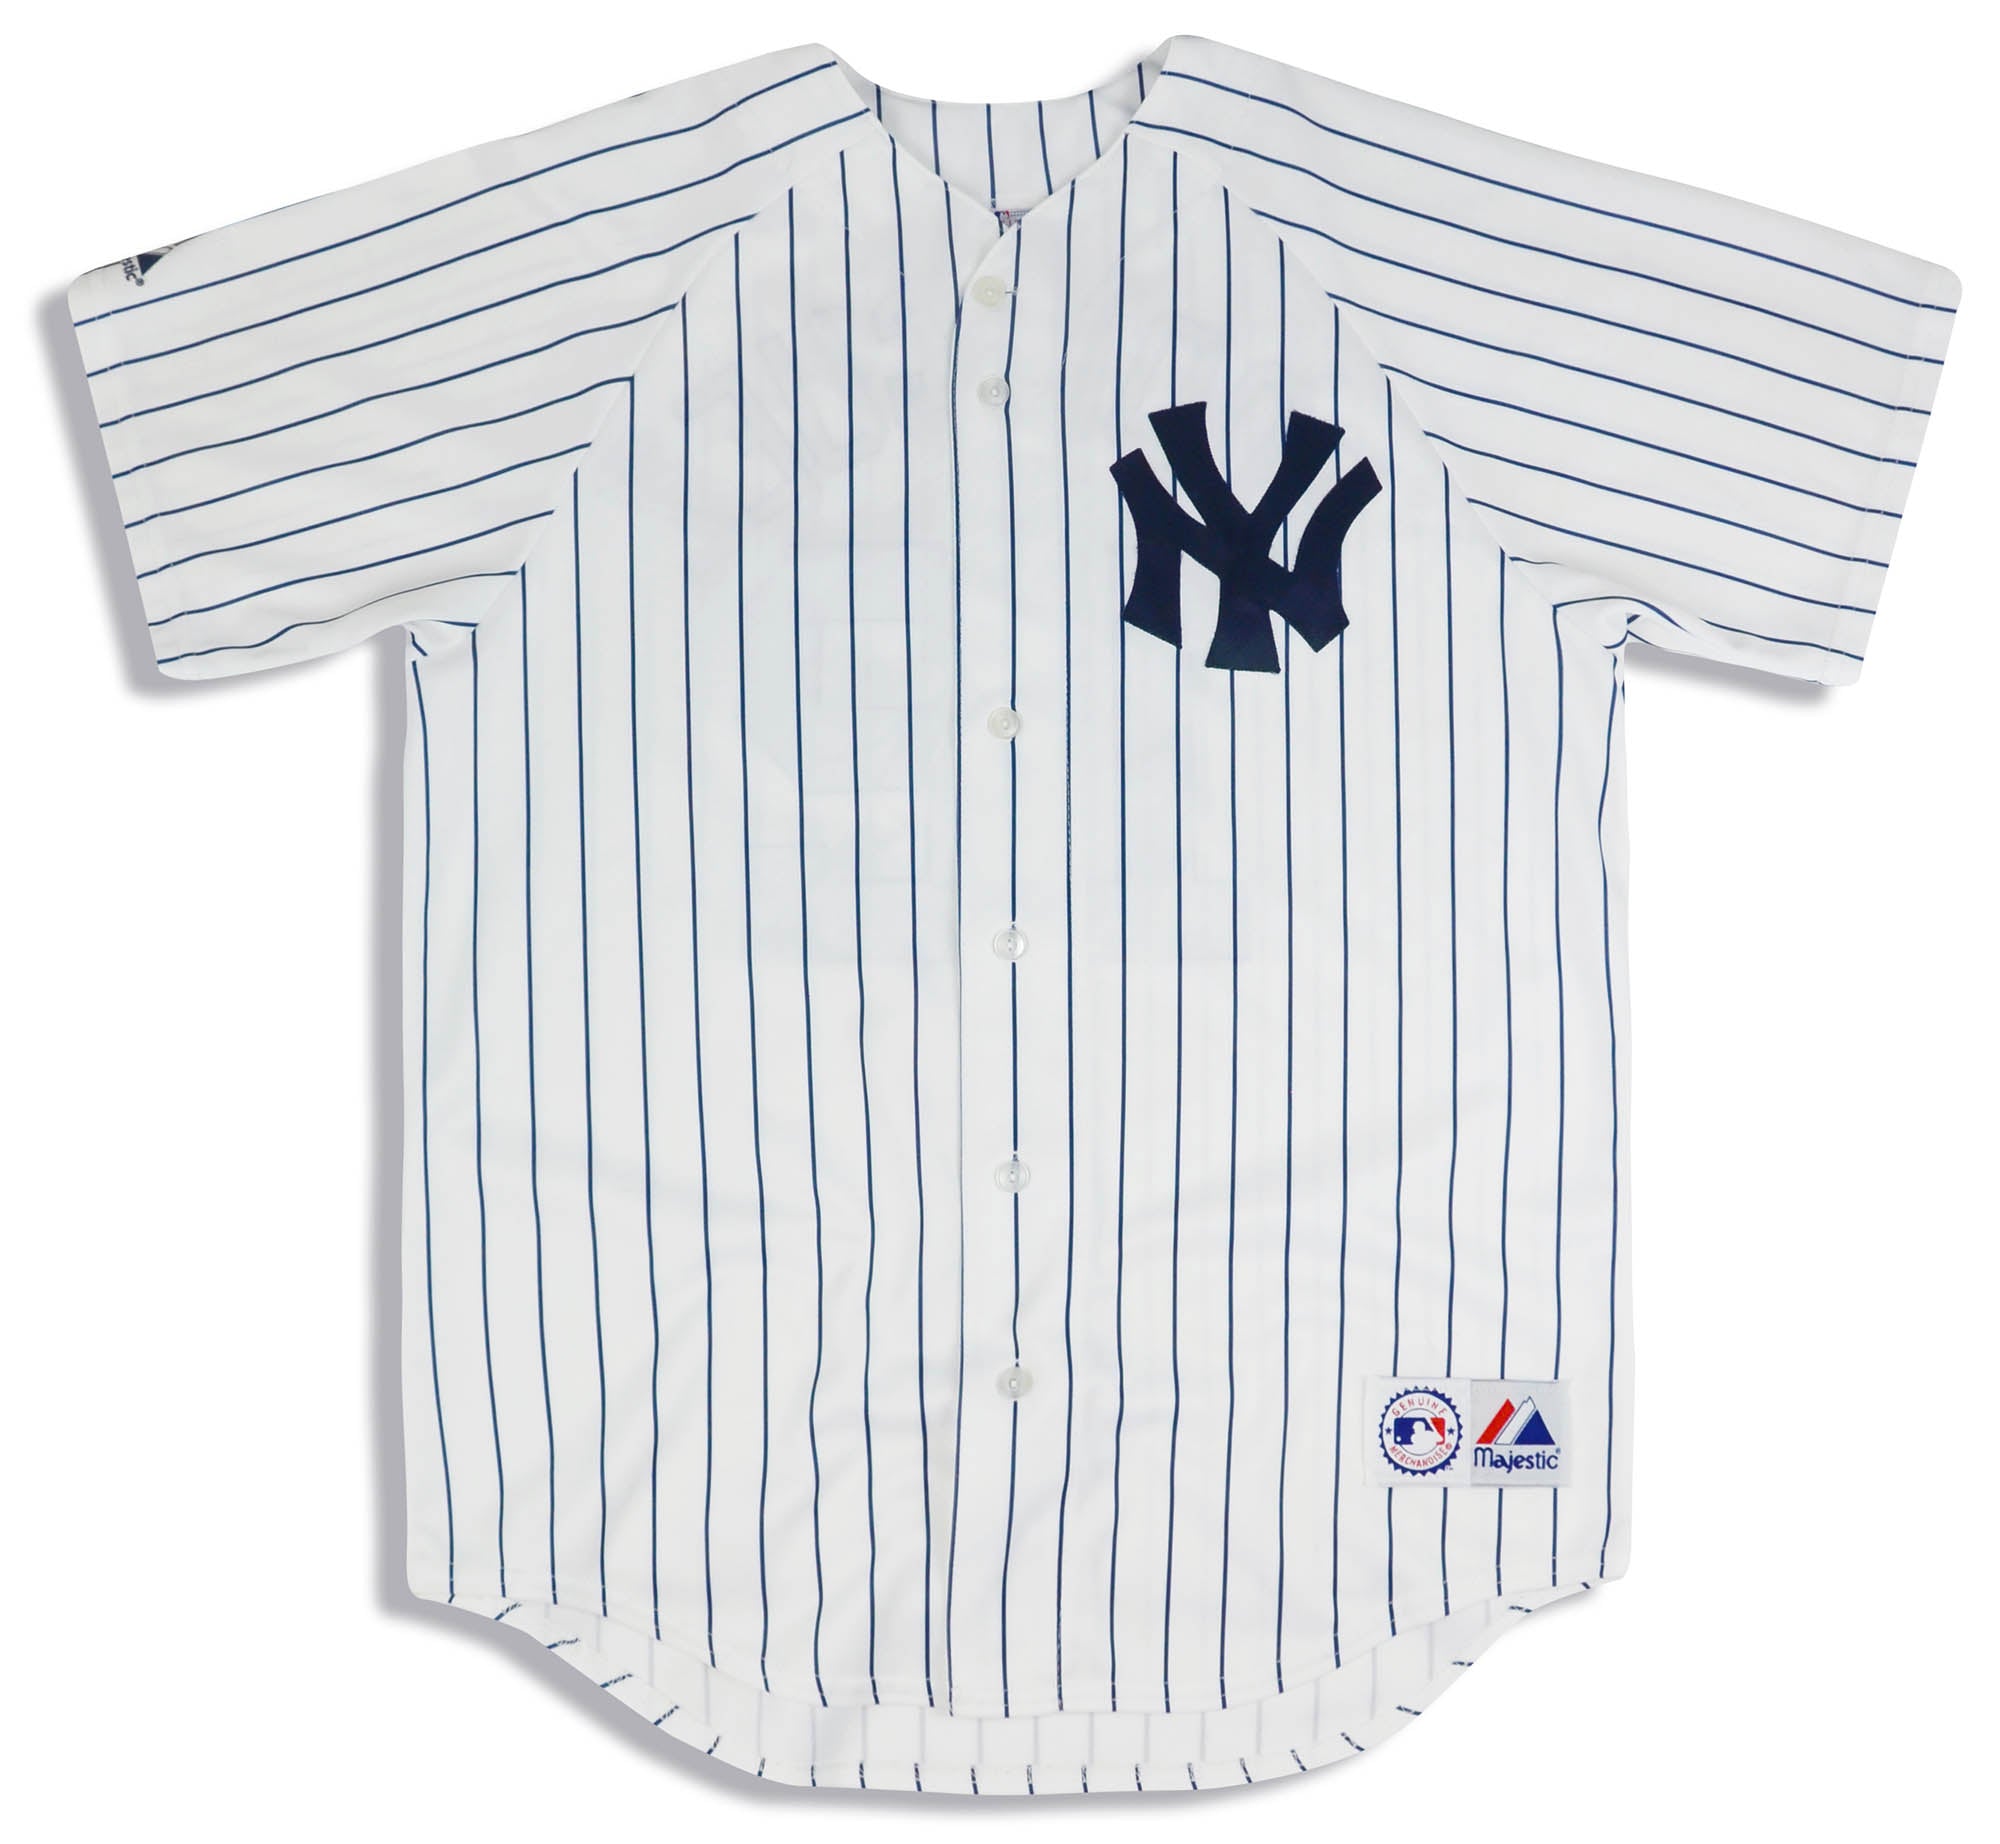 MLB New York Yankees Jersey Blue Majestic Vintage Baseball 